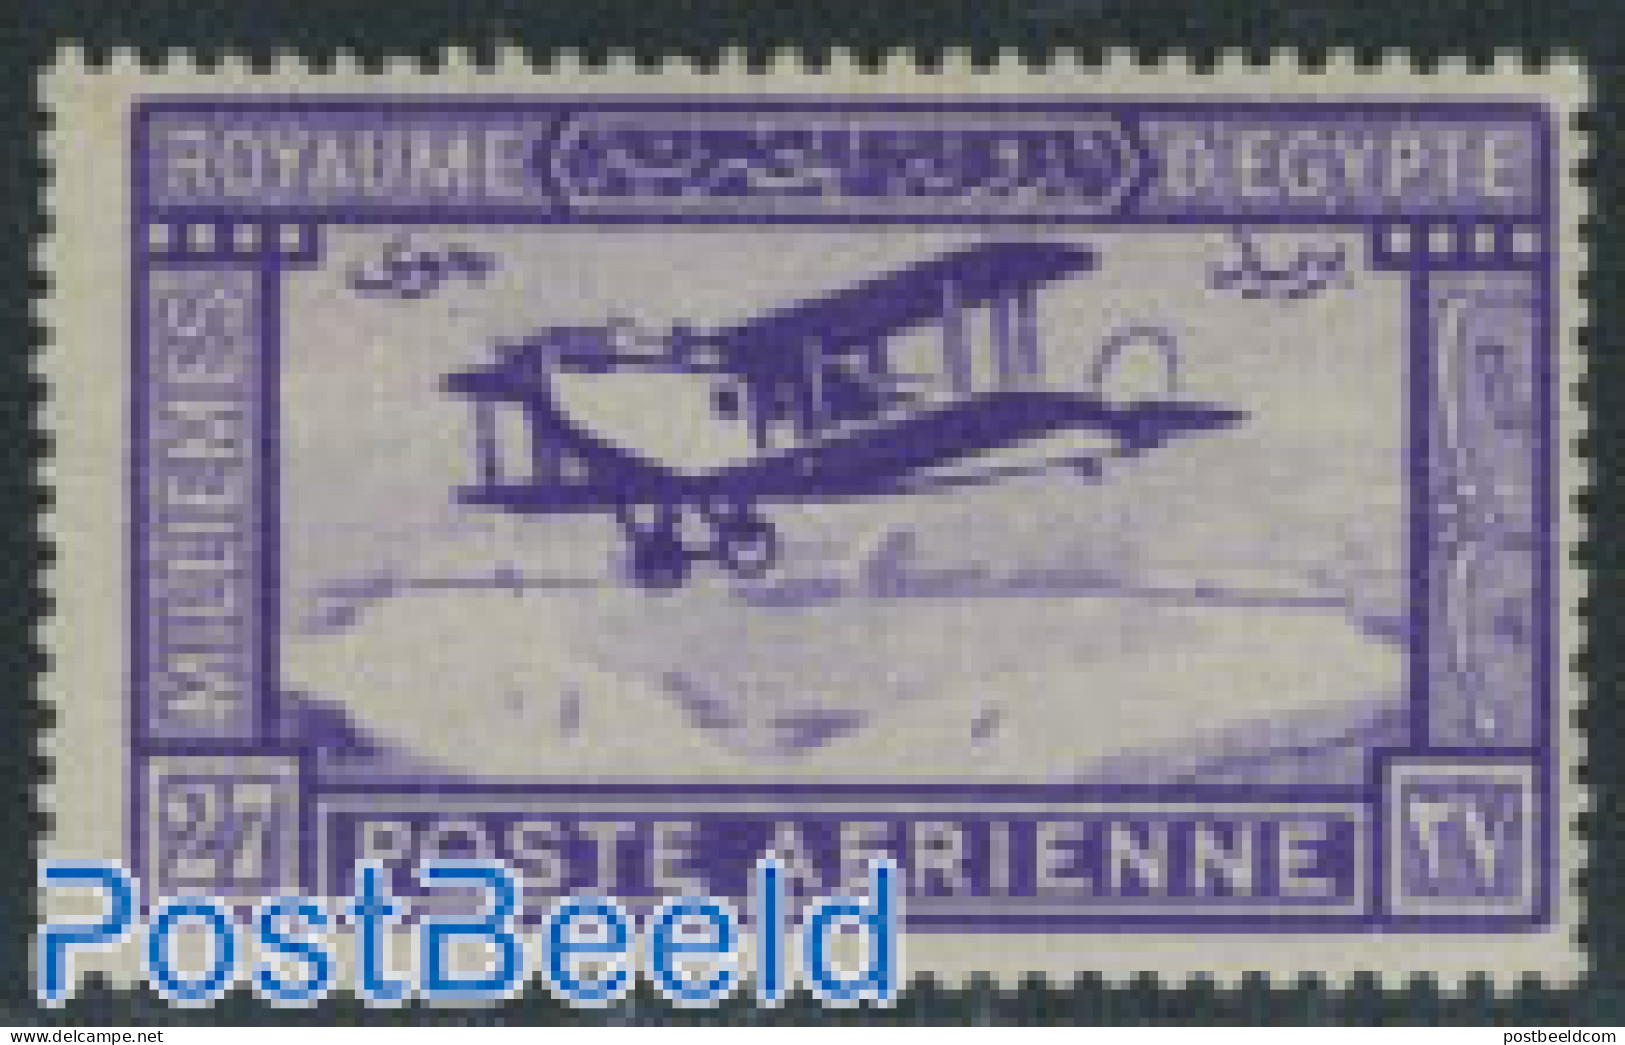 Egypt (Kingdom) 1926 Cairo-Bagdad Air Connection 1v, Unused (hinged), Transport - Aircraft & Aviation - Ungebraucht